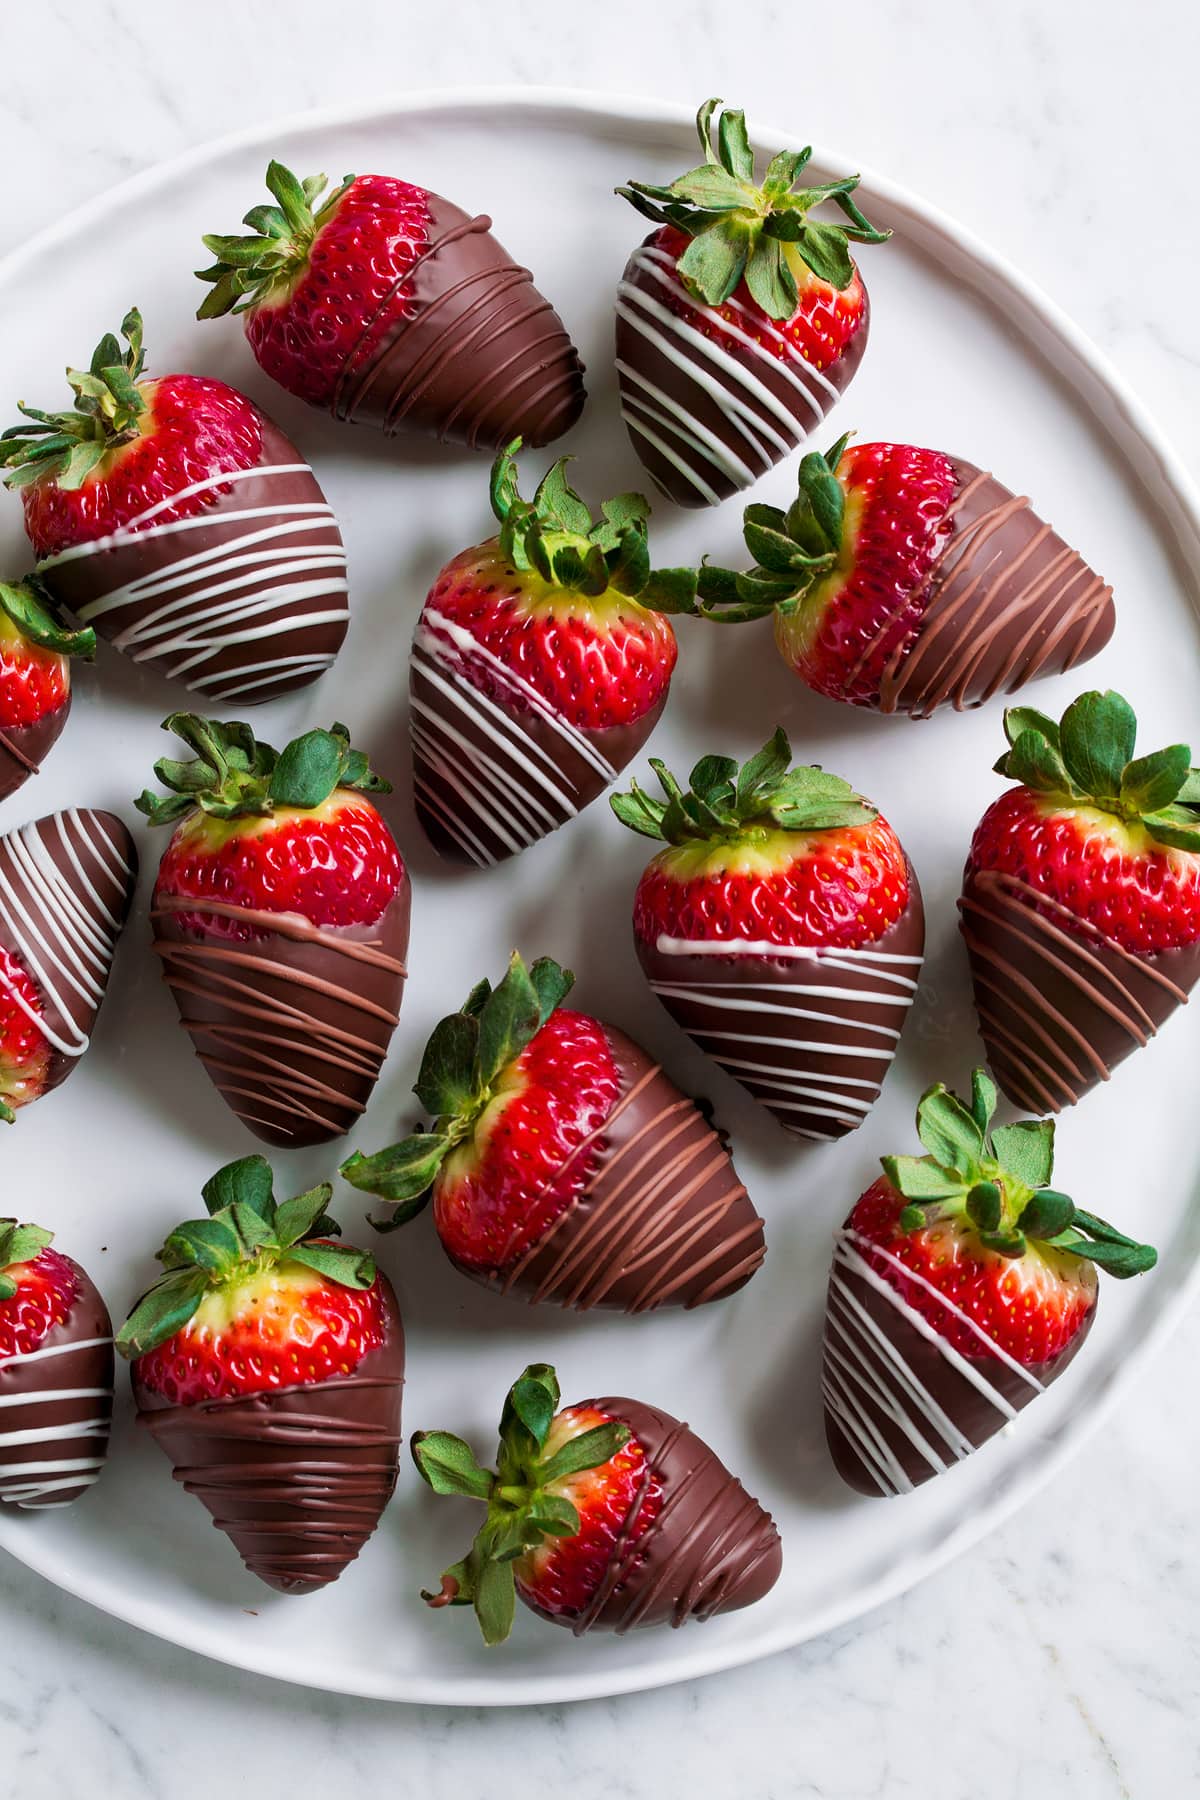 Chocolate dipped strawberries 